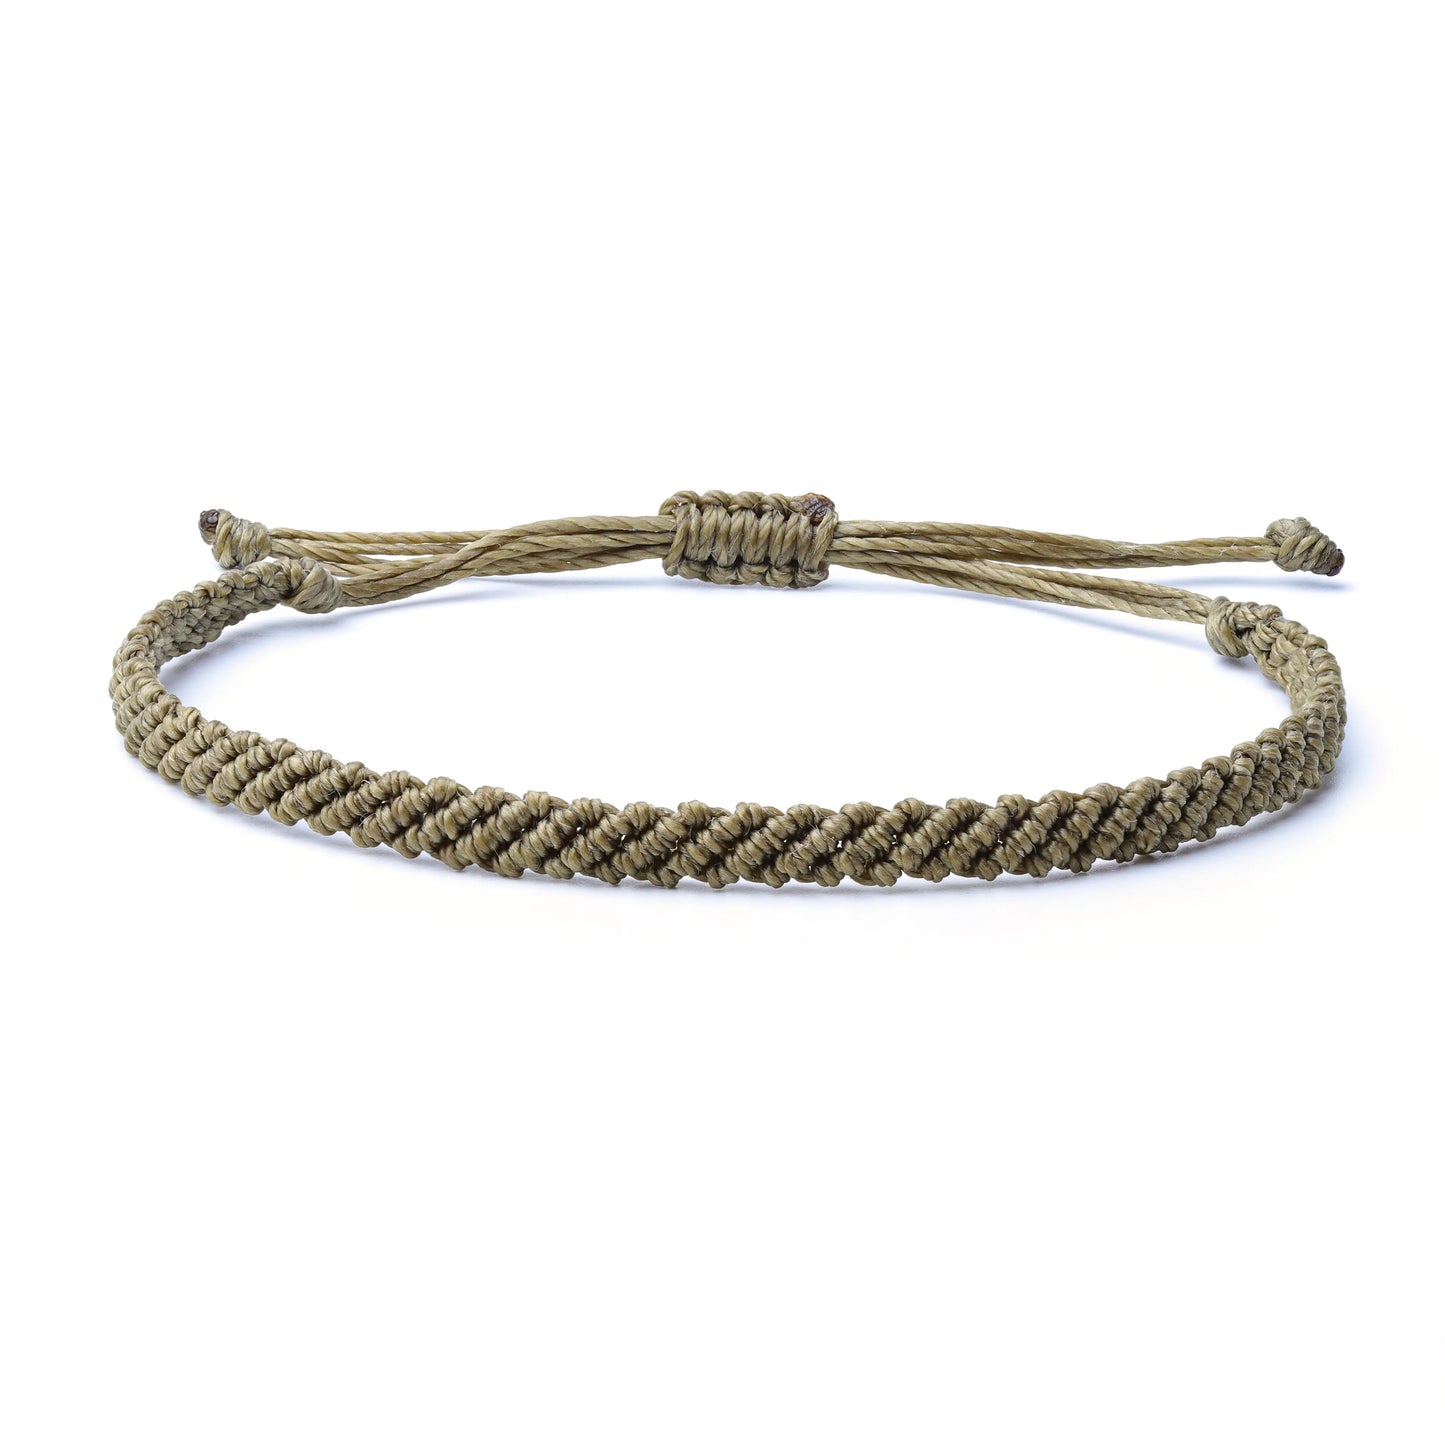 Linhasita lucky knots Tibetan Buddhist bracelet